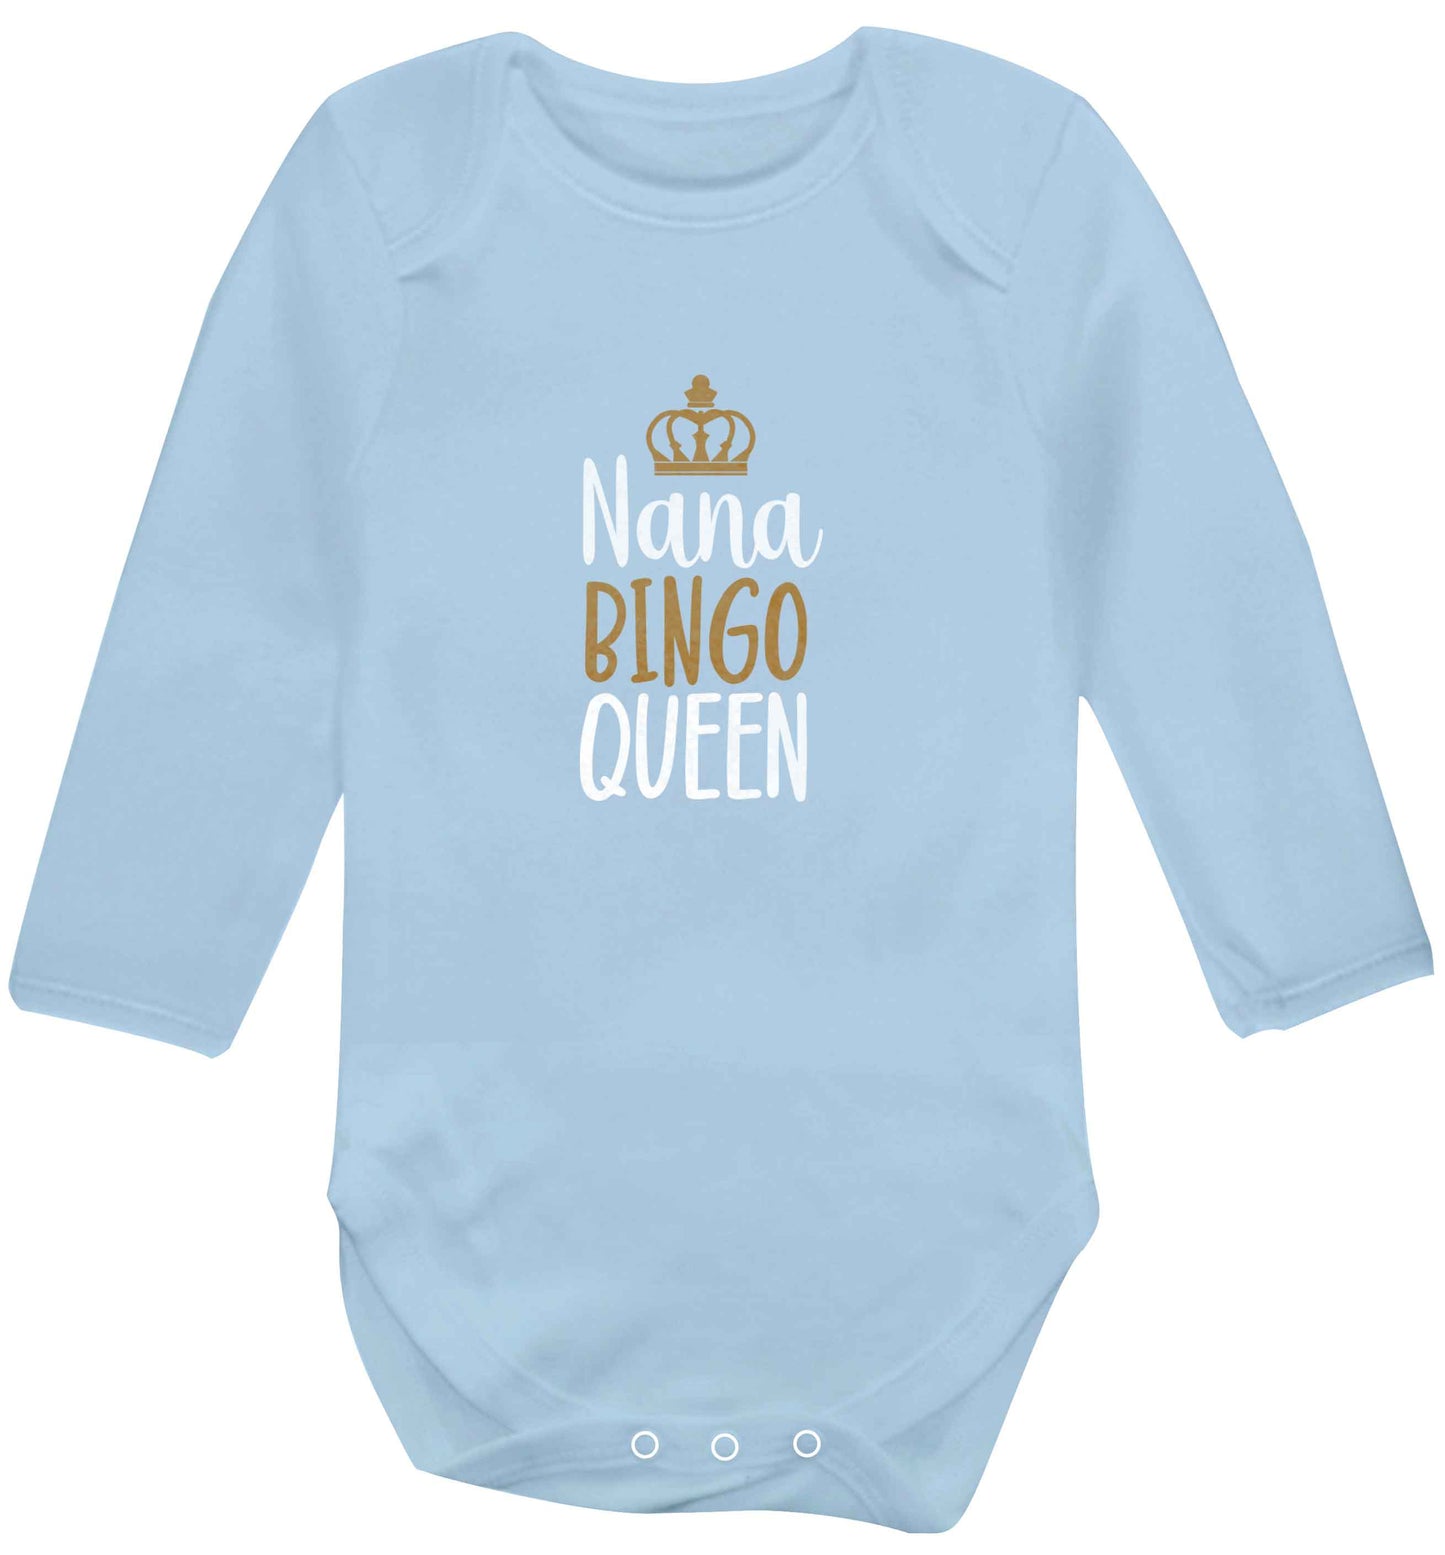 Personalised bingo queen baby vest long sleeved pale blue 6-12 months